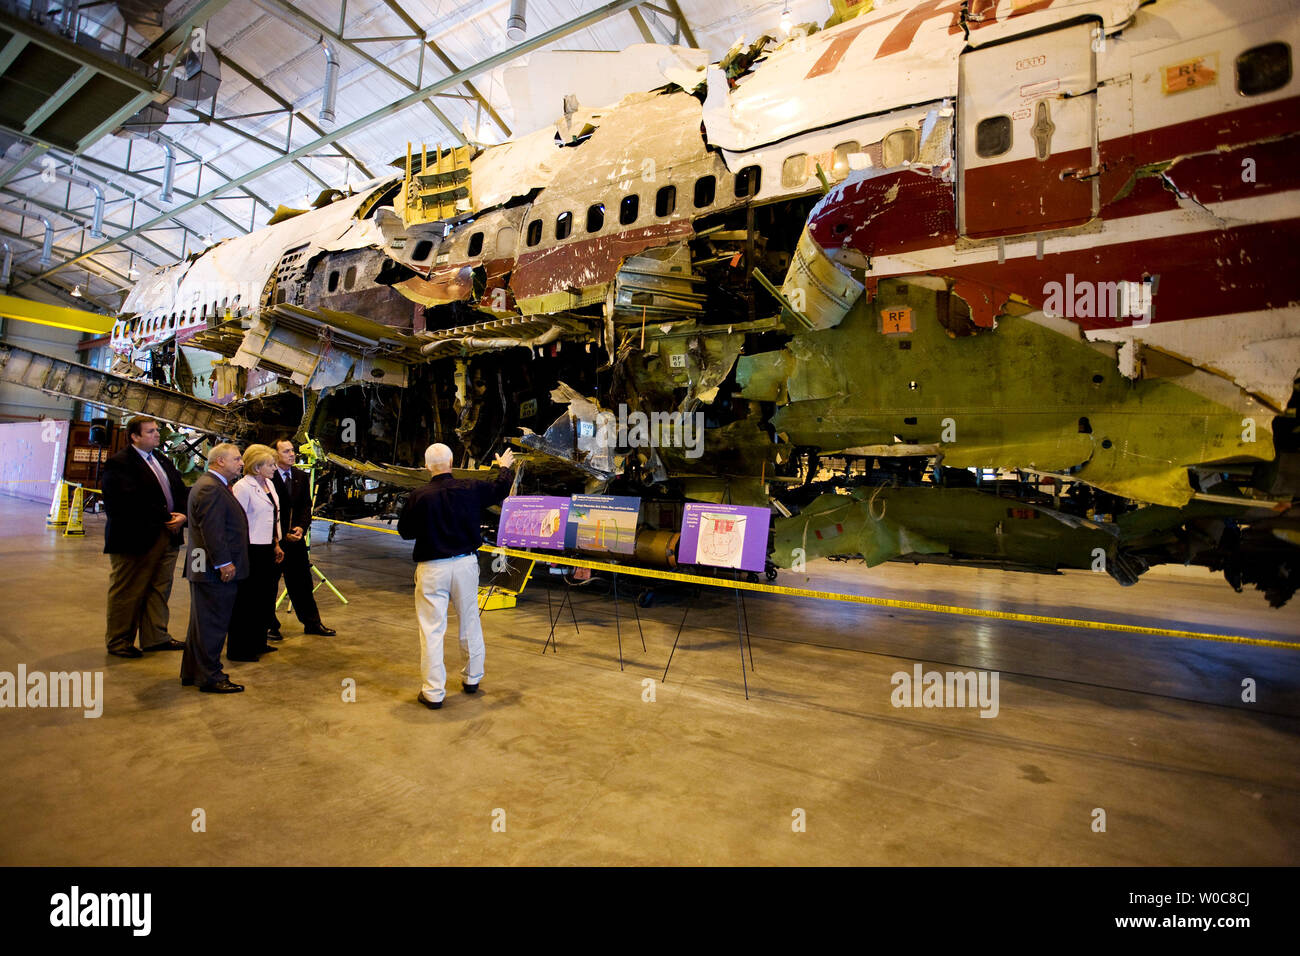 TWA Flight 800 Crash Plane Picture - Boeing 747 - Photo